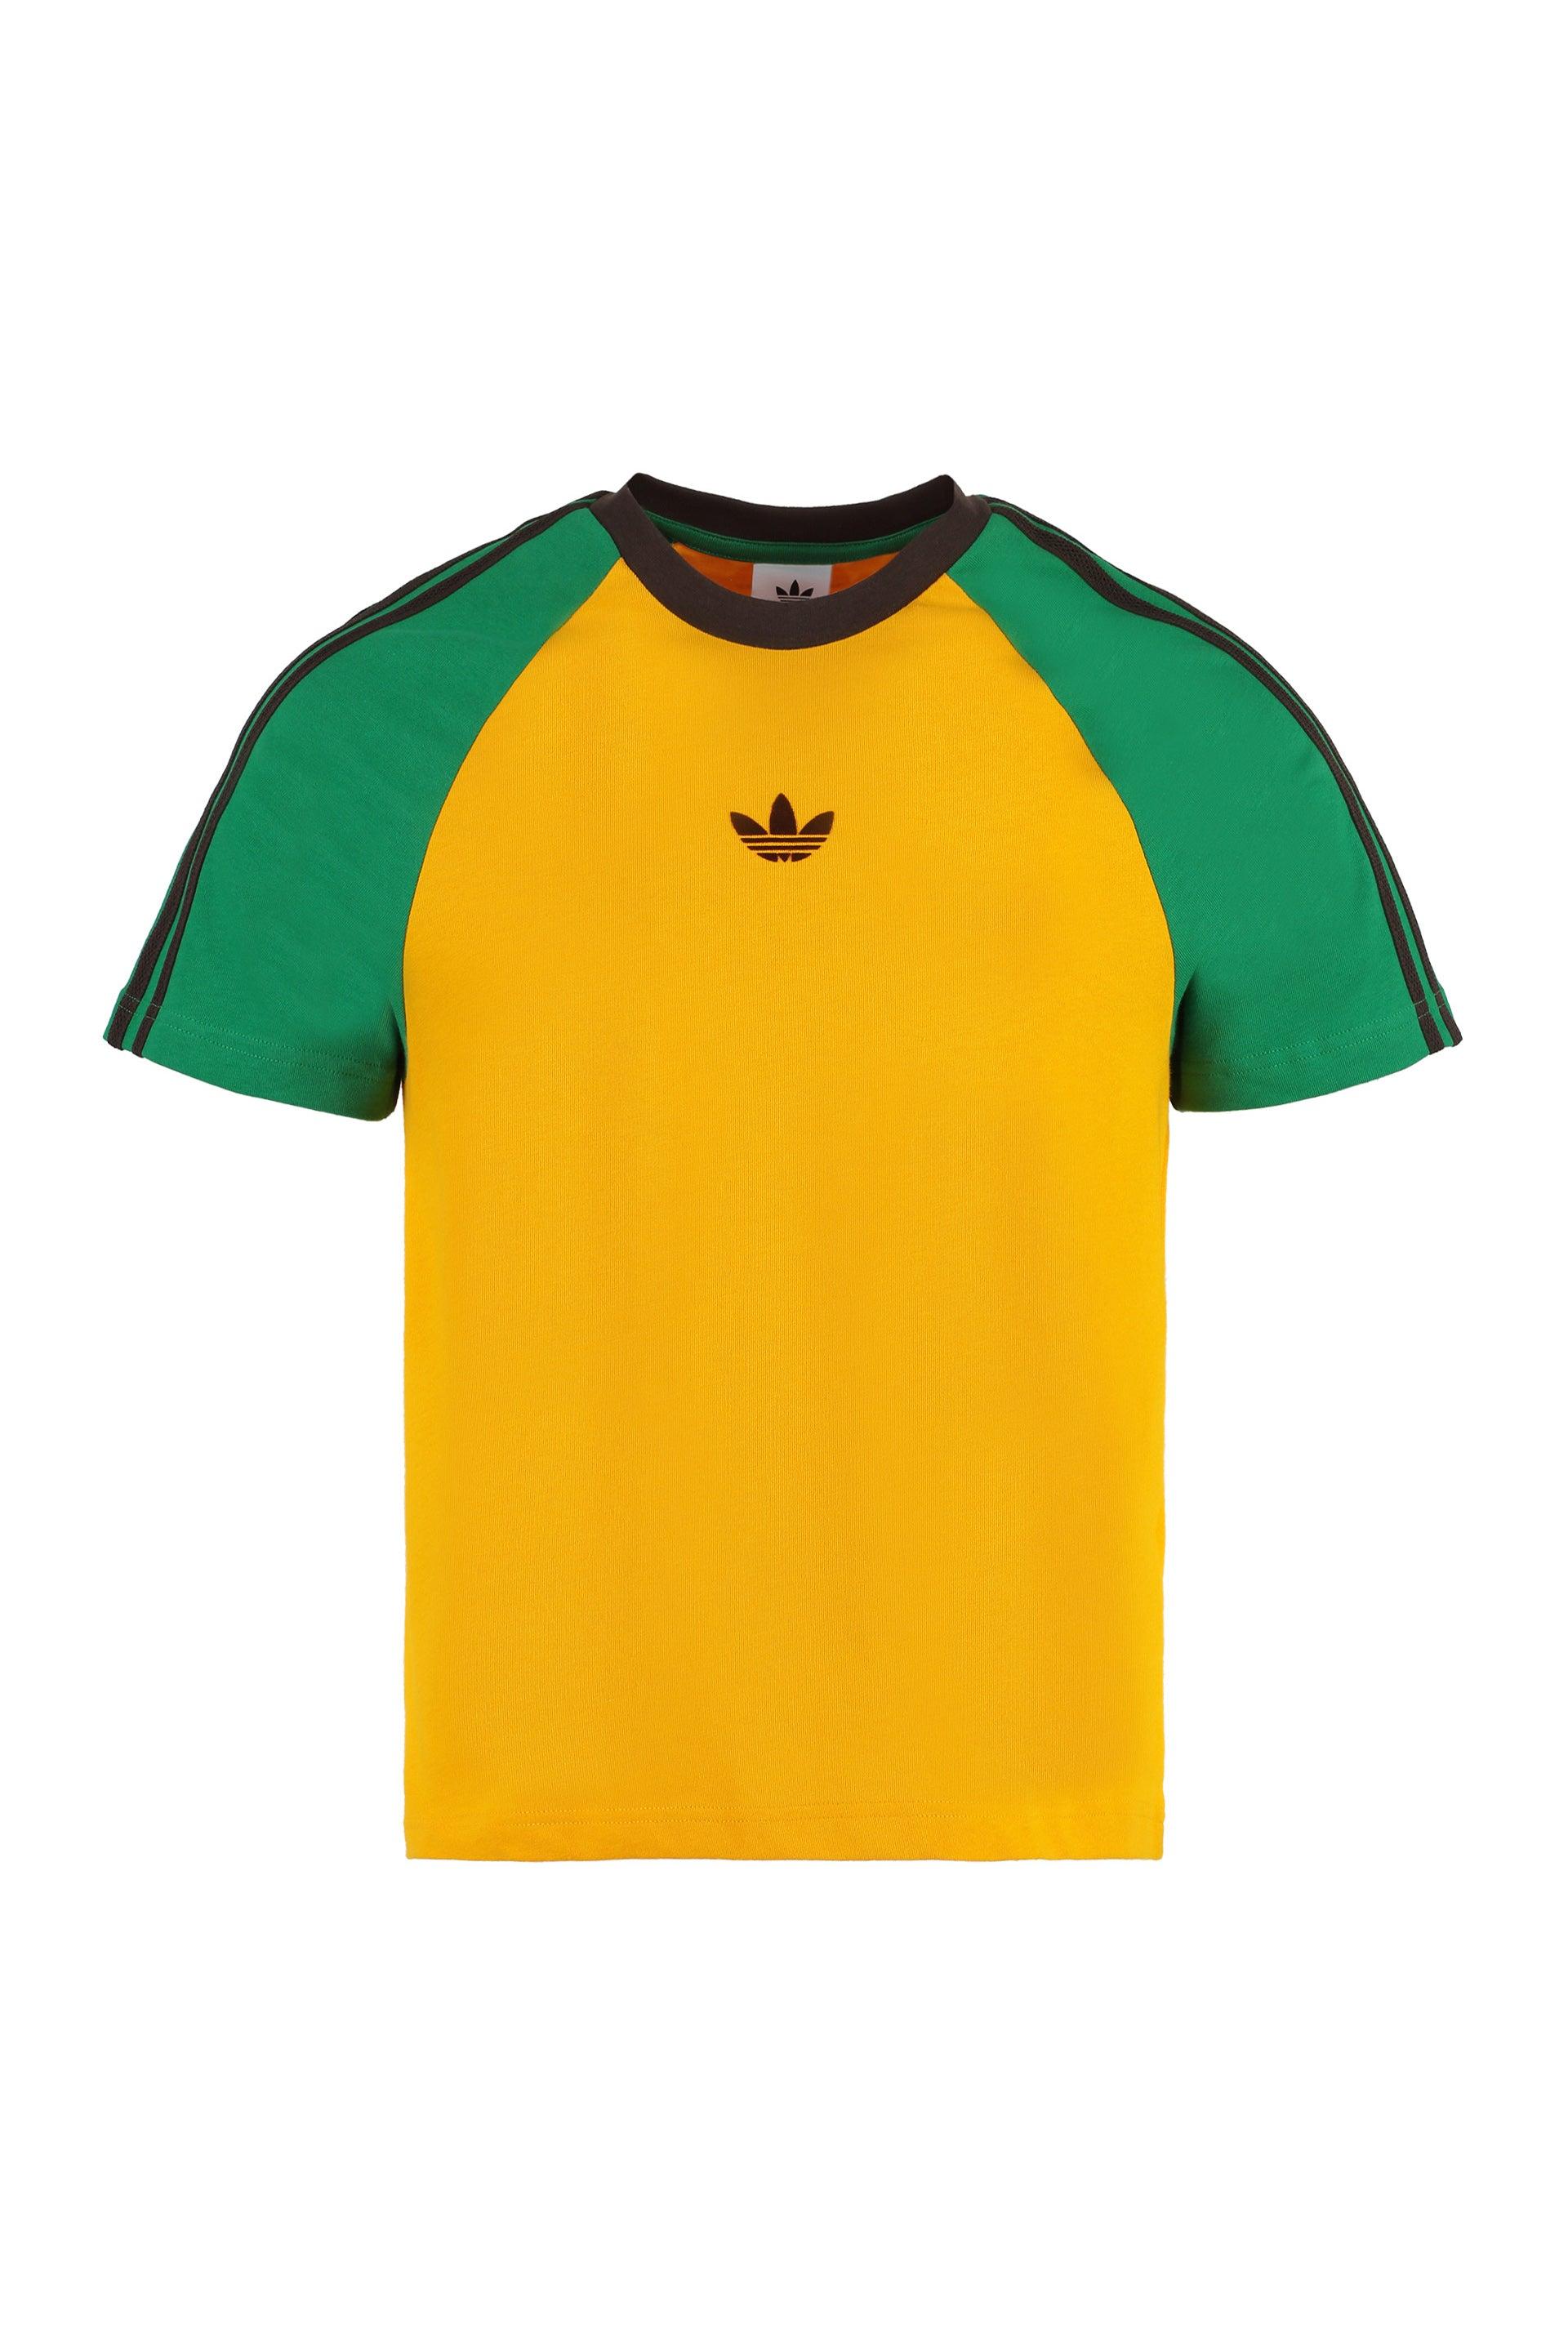 Adidas x Wales Bonner logo-embroidered T-shirt - Farfetch